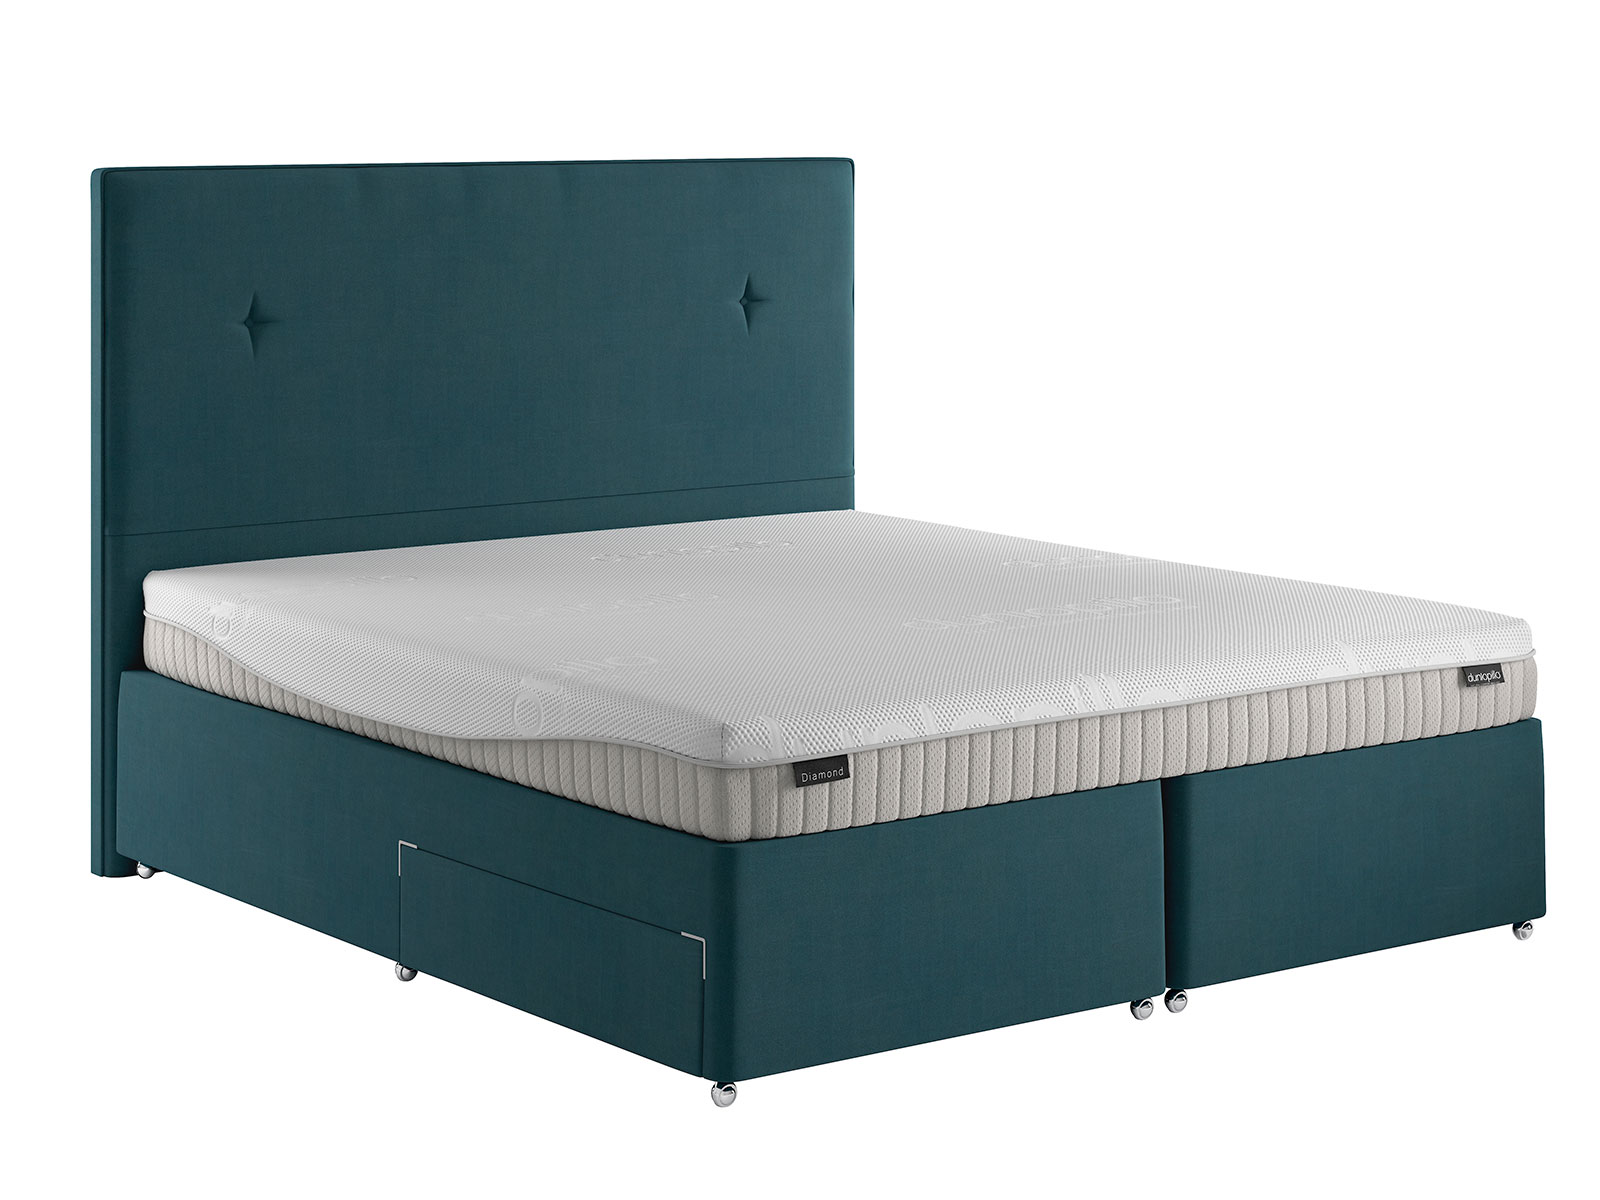 dunlopillo mattress sale uk